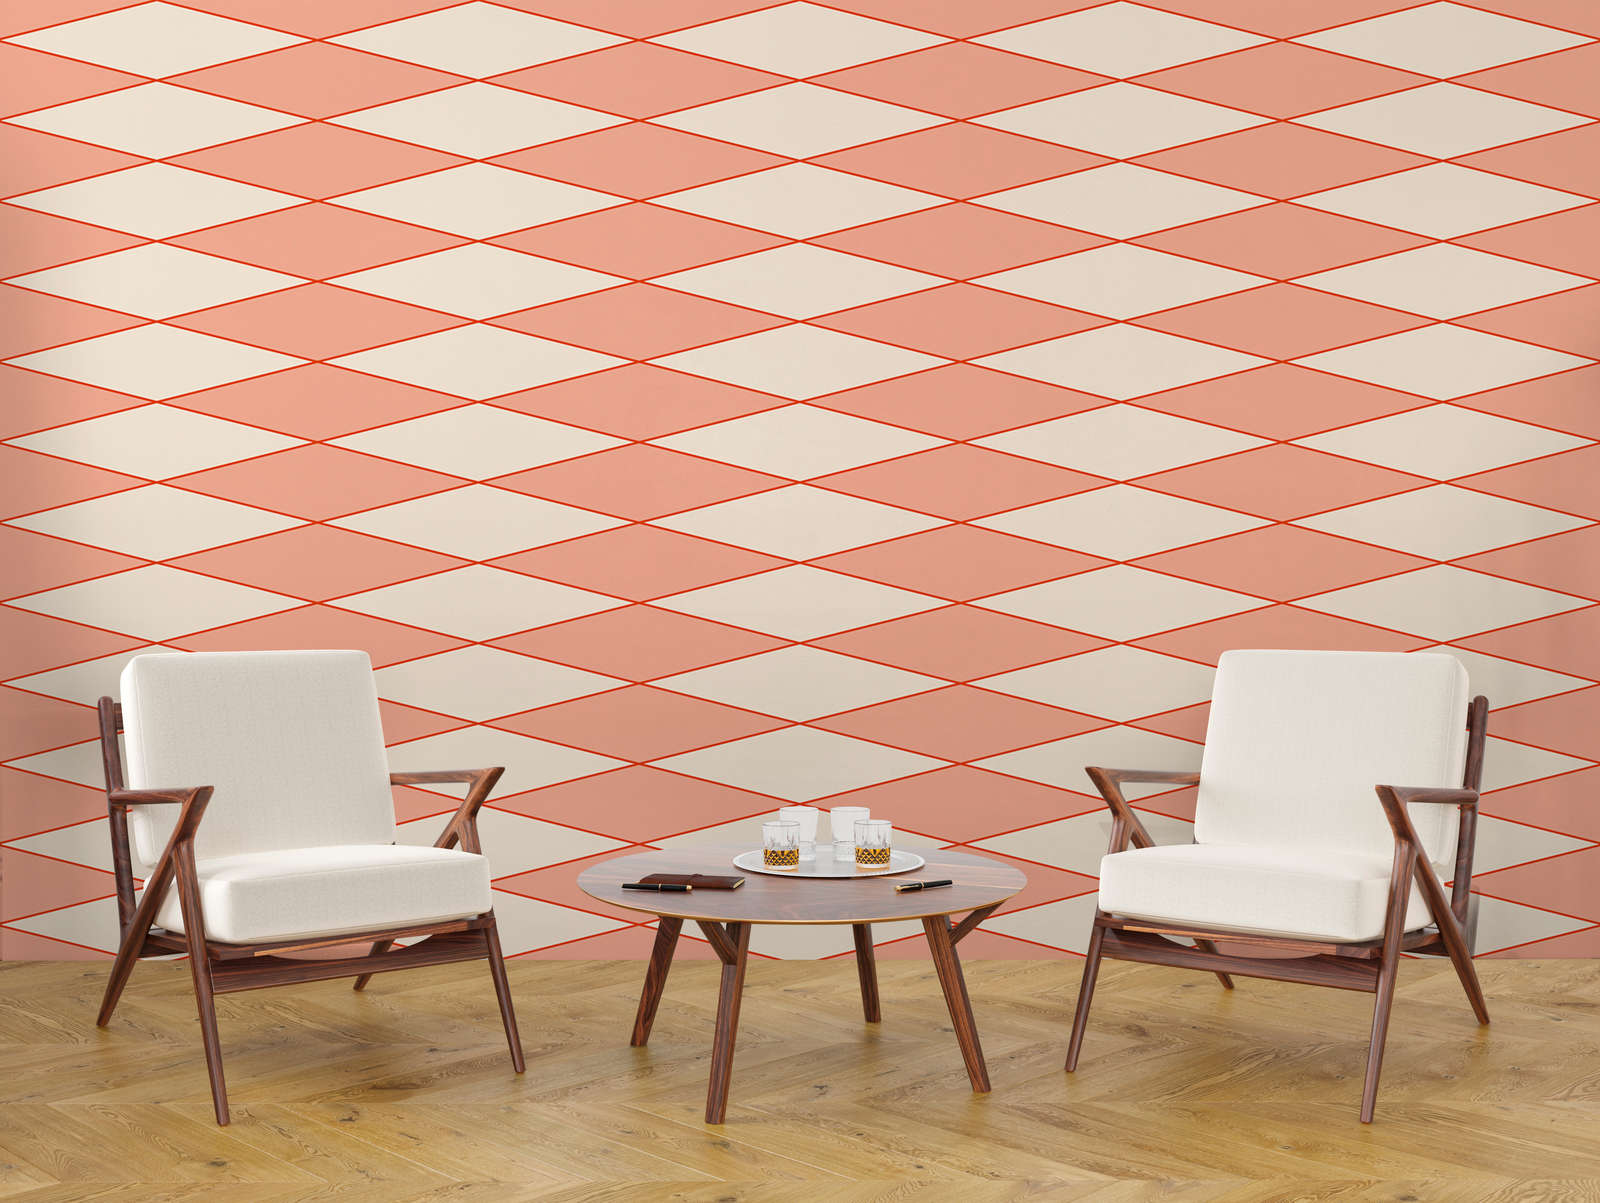             Photo wallpaper with diamonds & line pattern - Orange, Beige | Textured non-woven
        